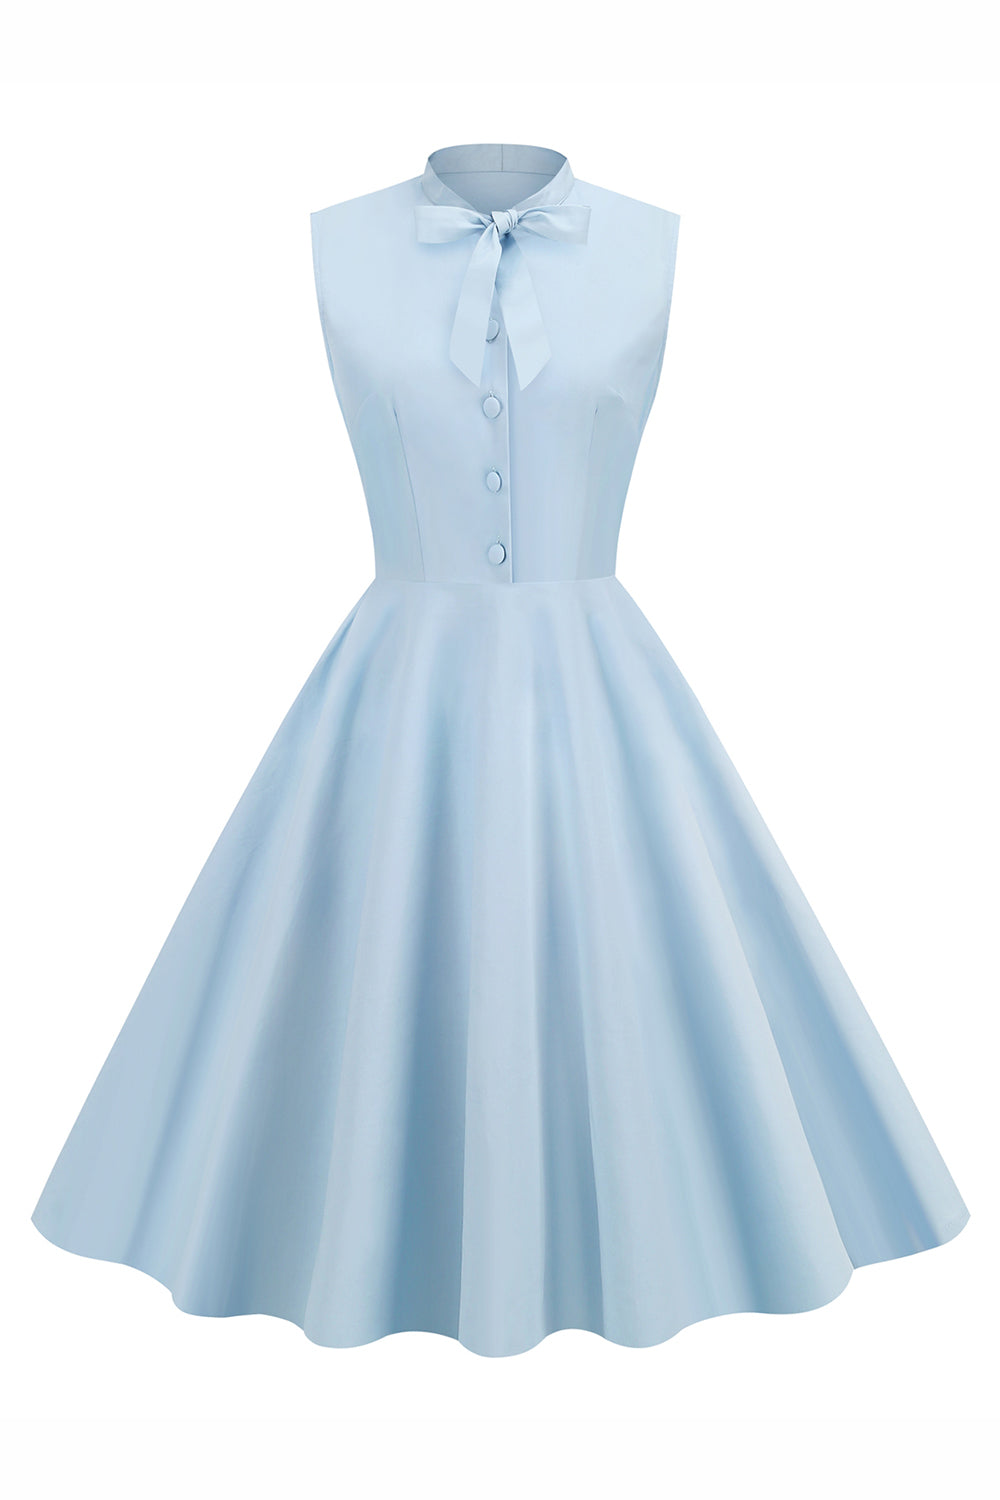 Bleu clair Solid A-line 1950s Robe avec boutons